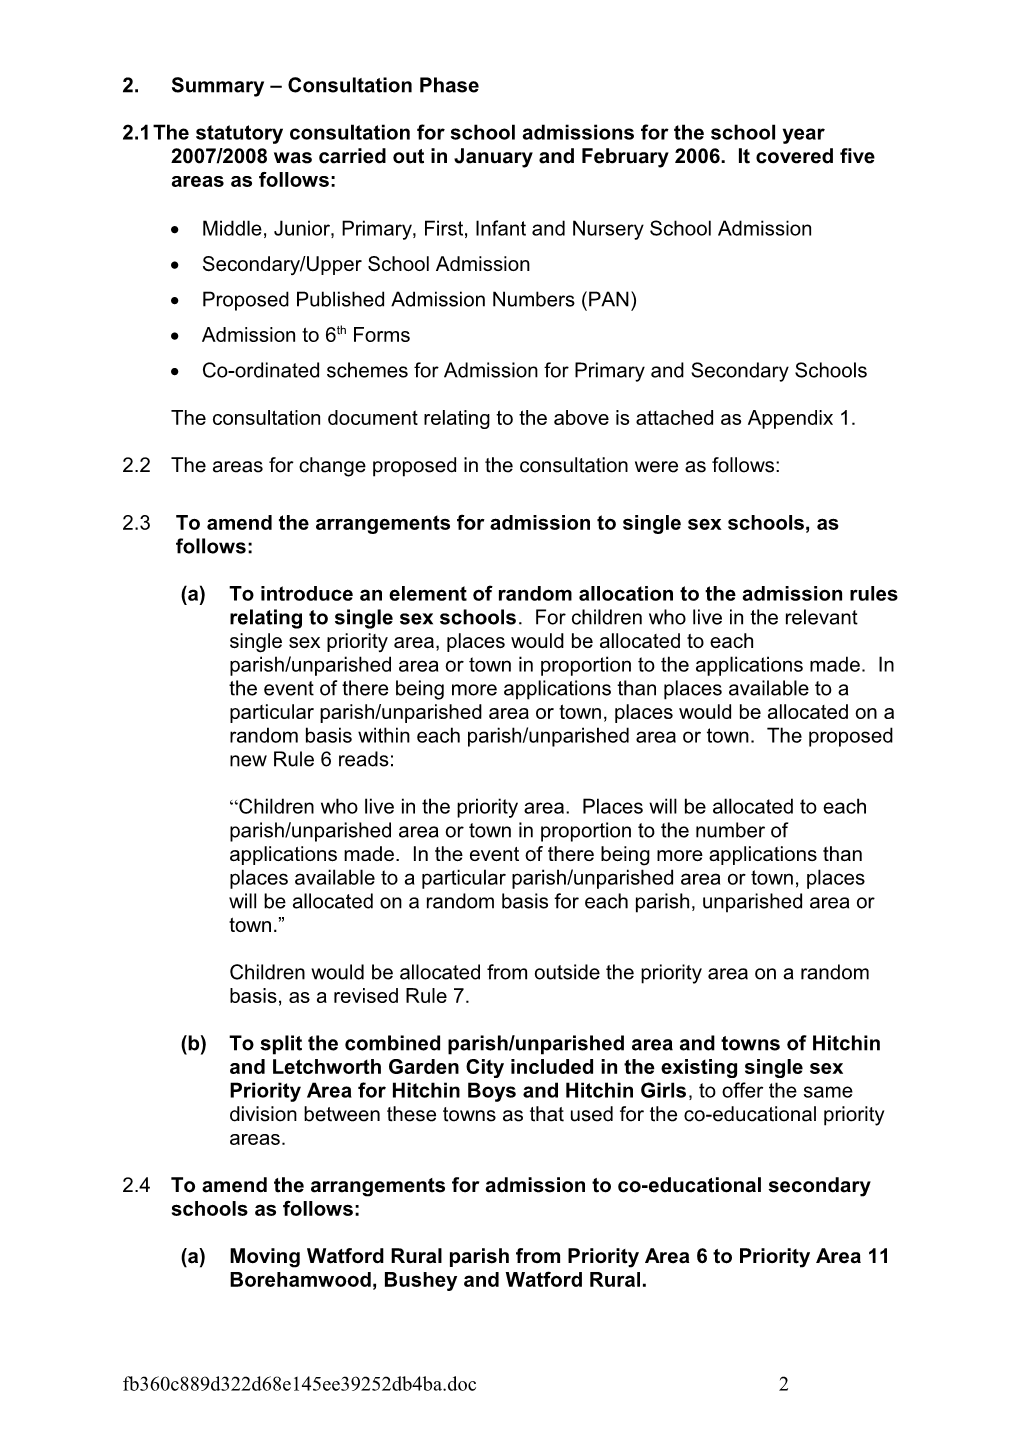 Consultation on Admission Arrangements for 2007-2008